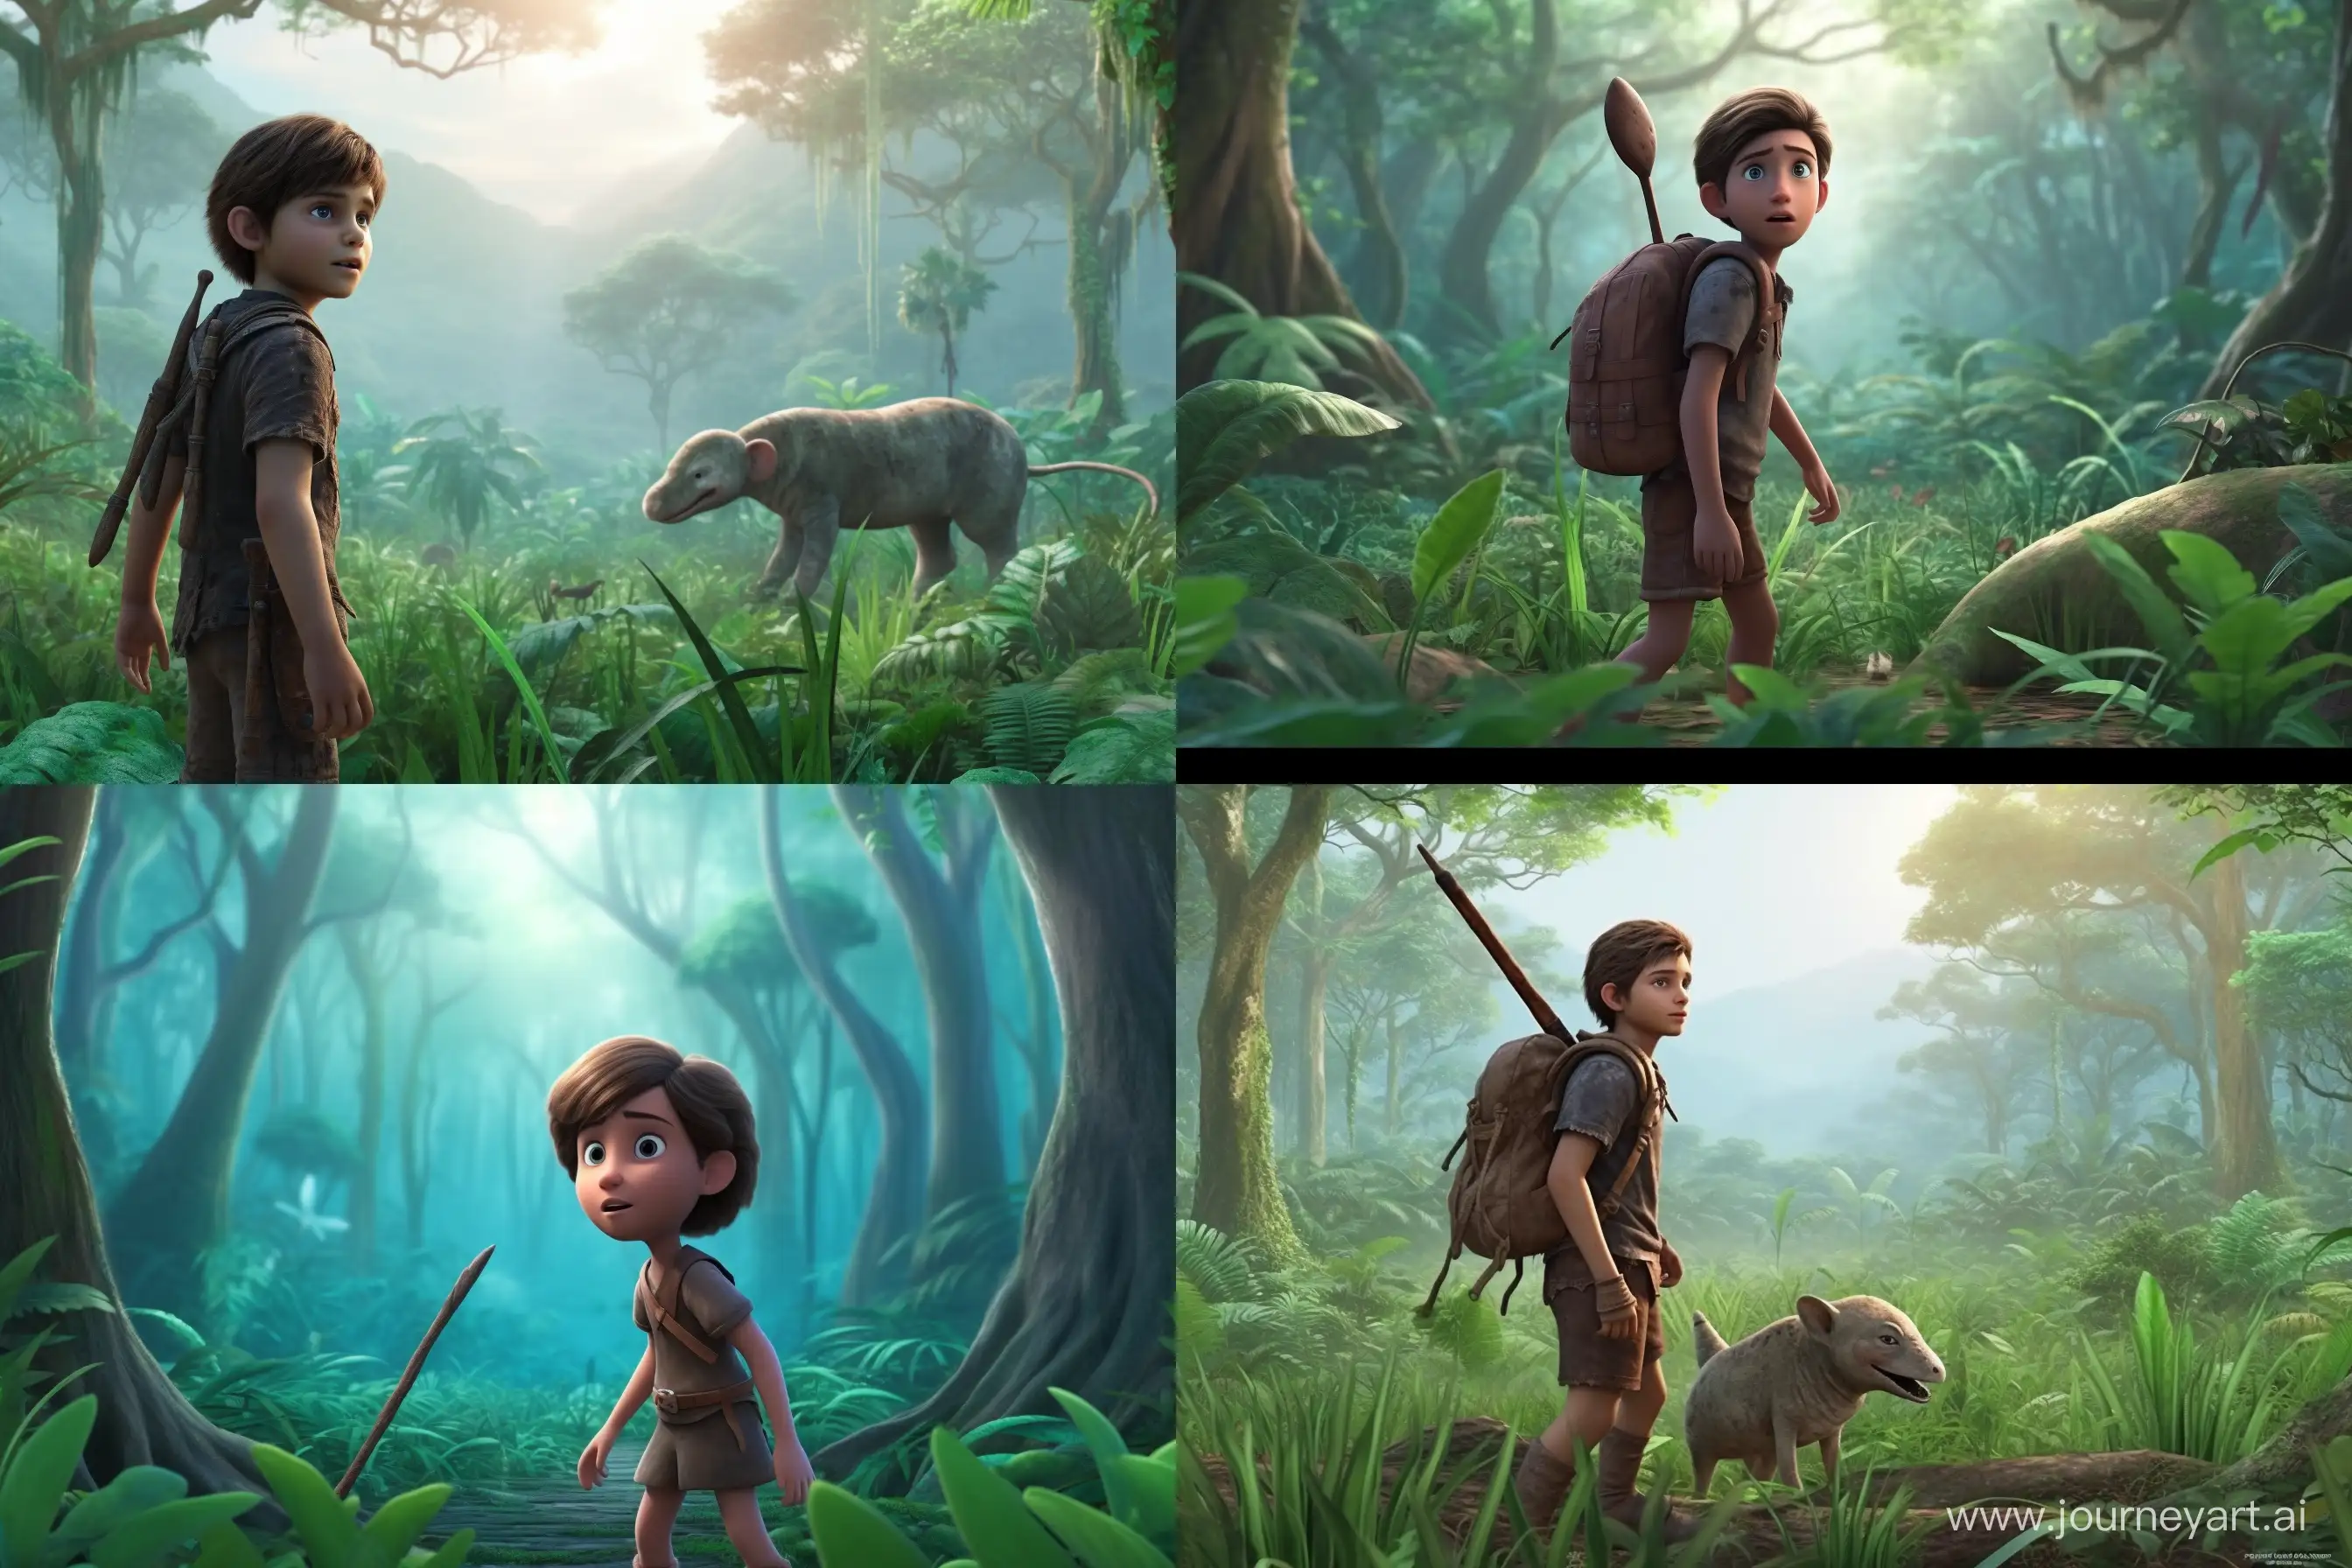 Curious-Boy-Explores-Enchanting-Jungle-Village-in-HyperRealistic-8K-Pixar-Style